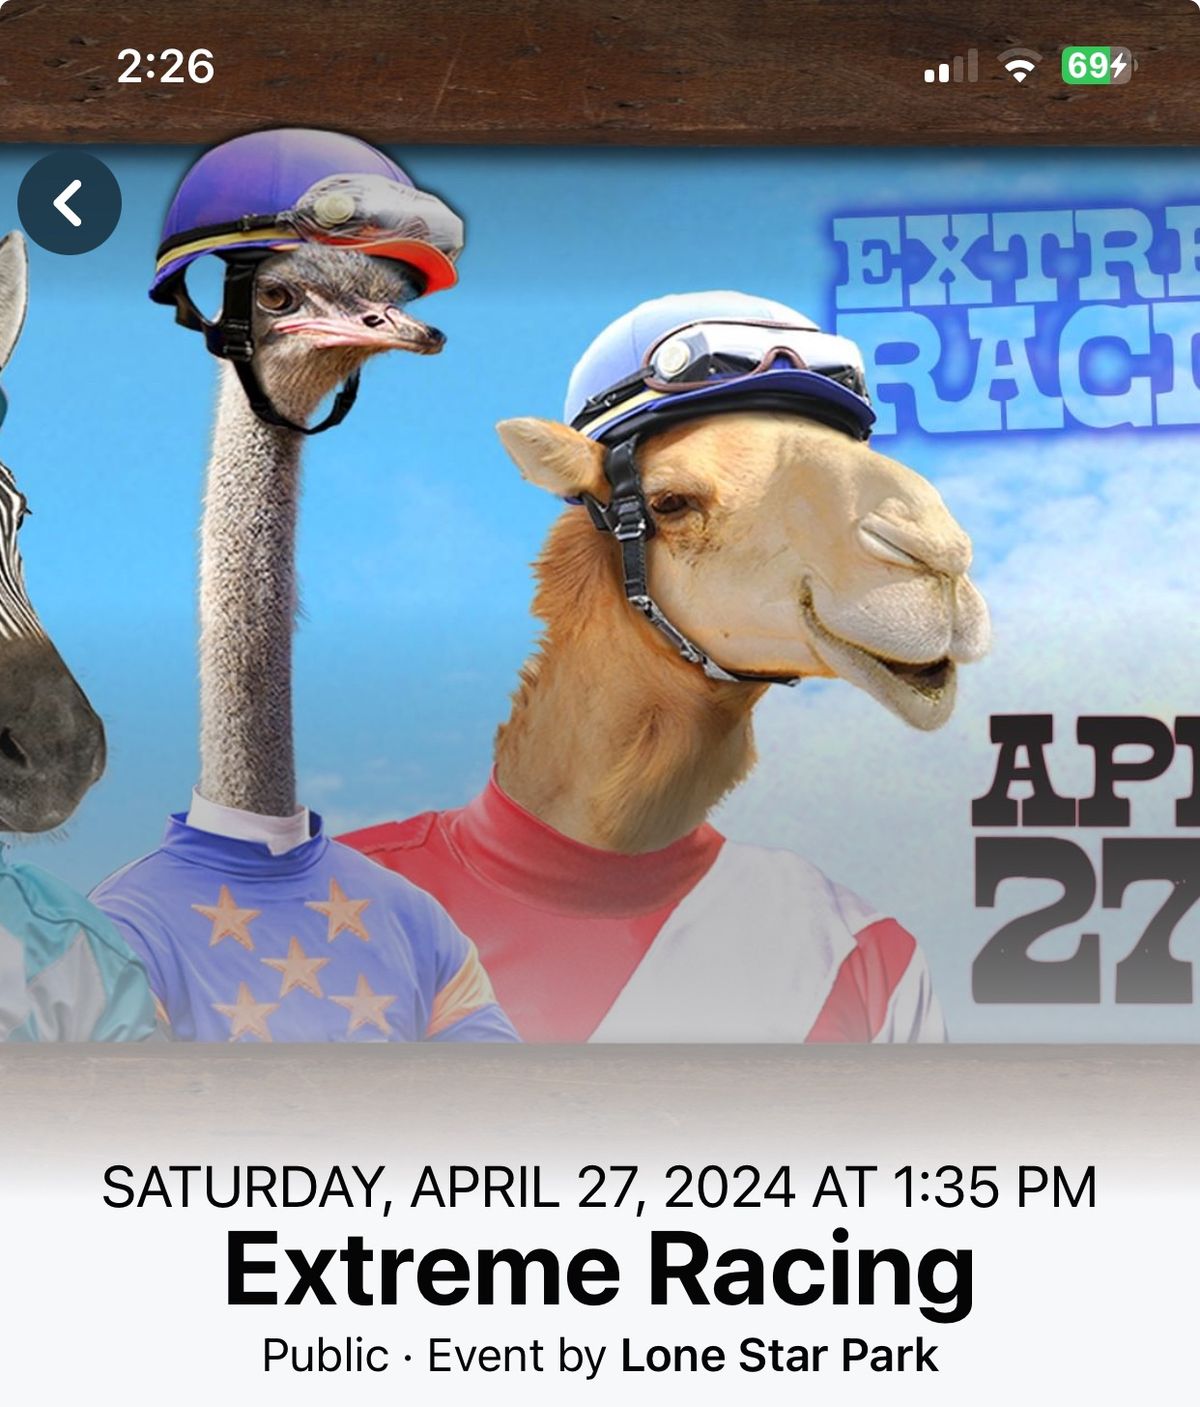 Benbrook TX - Attending Extreme Racing